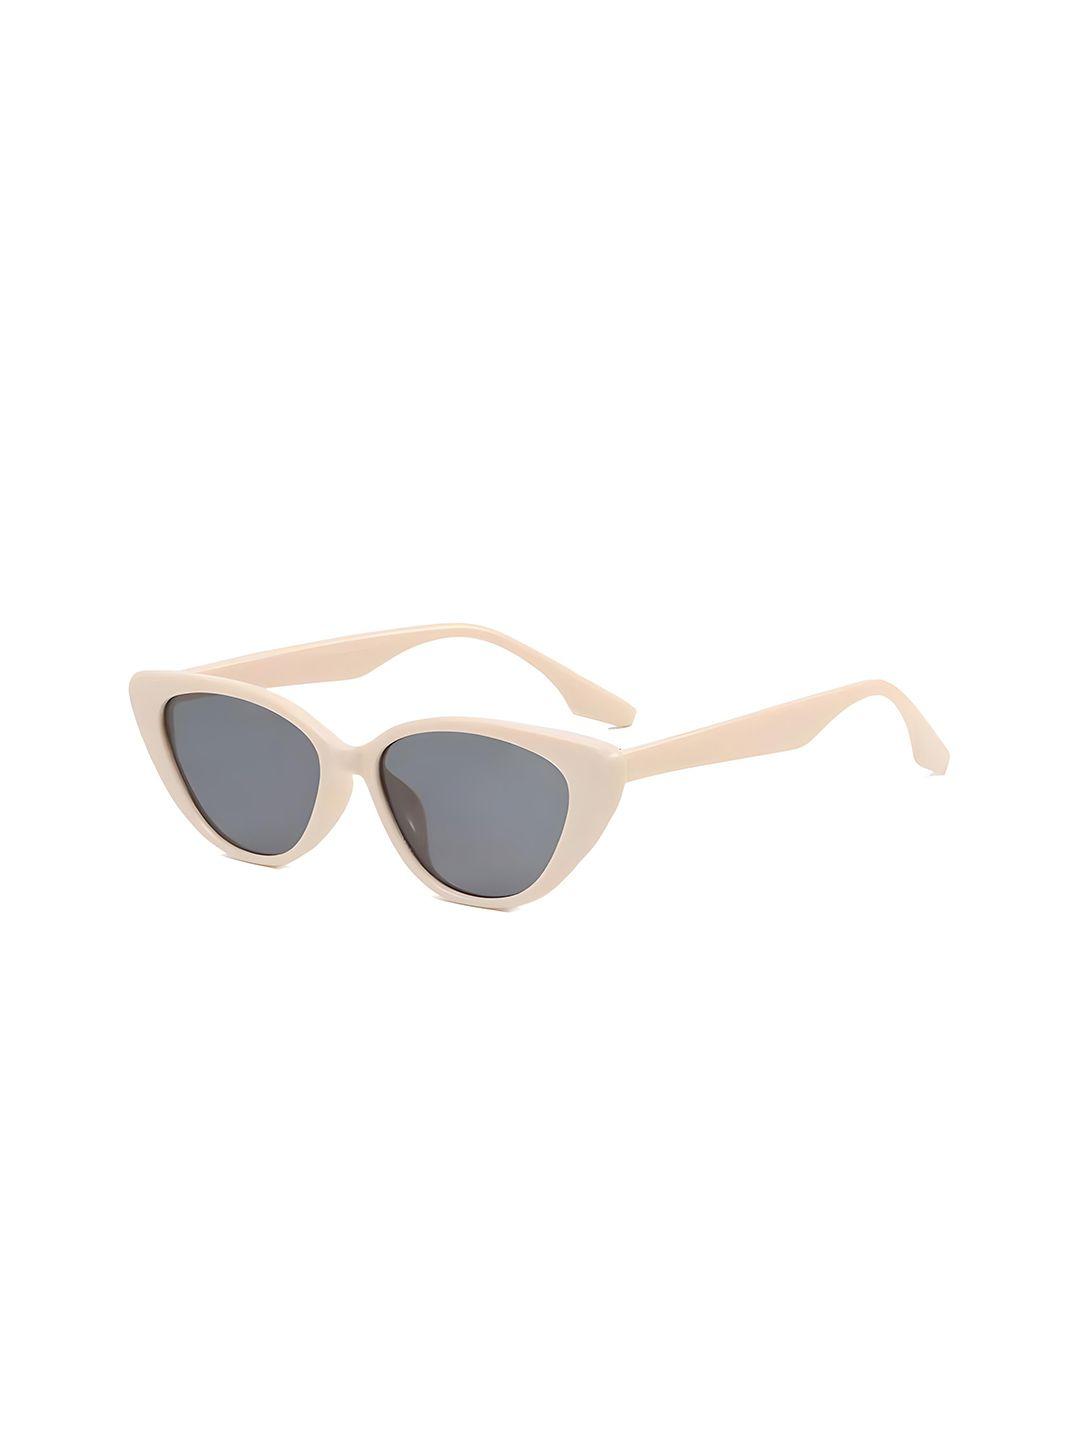 syga unisex cateye sunglasses with uv protected lens gl-269